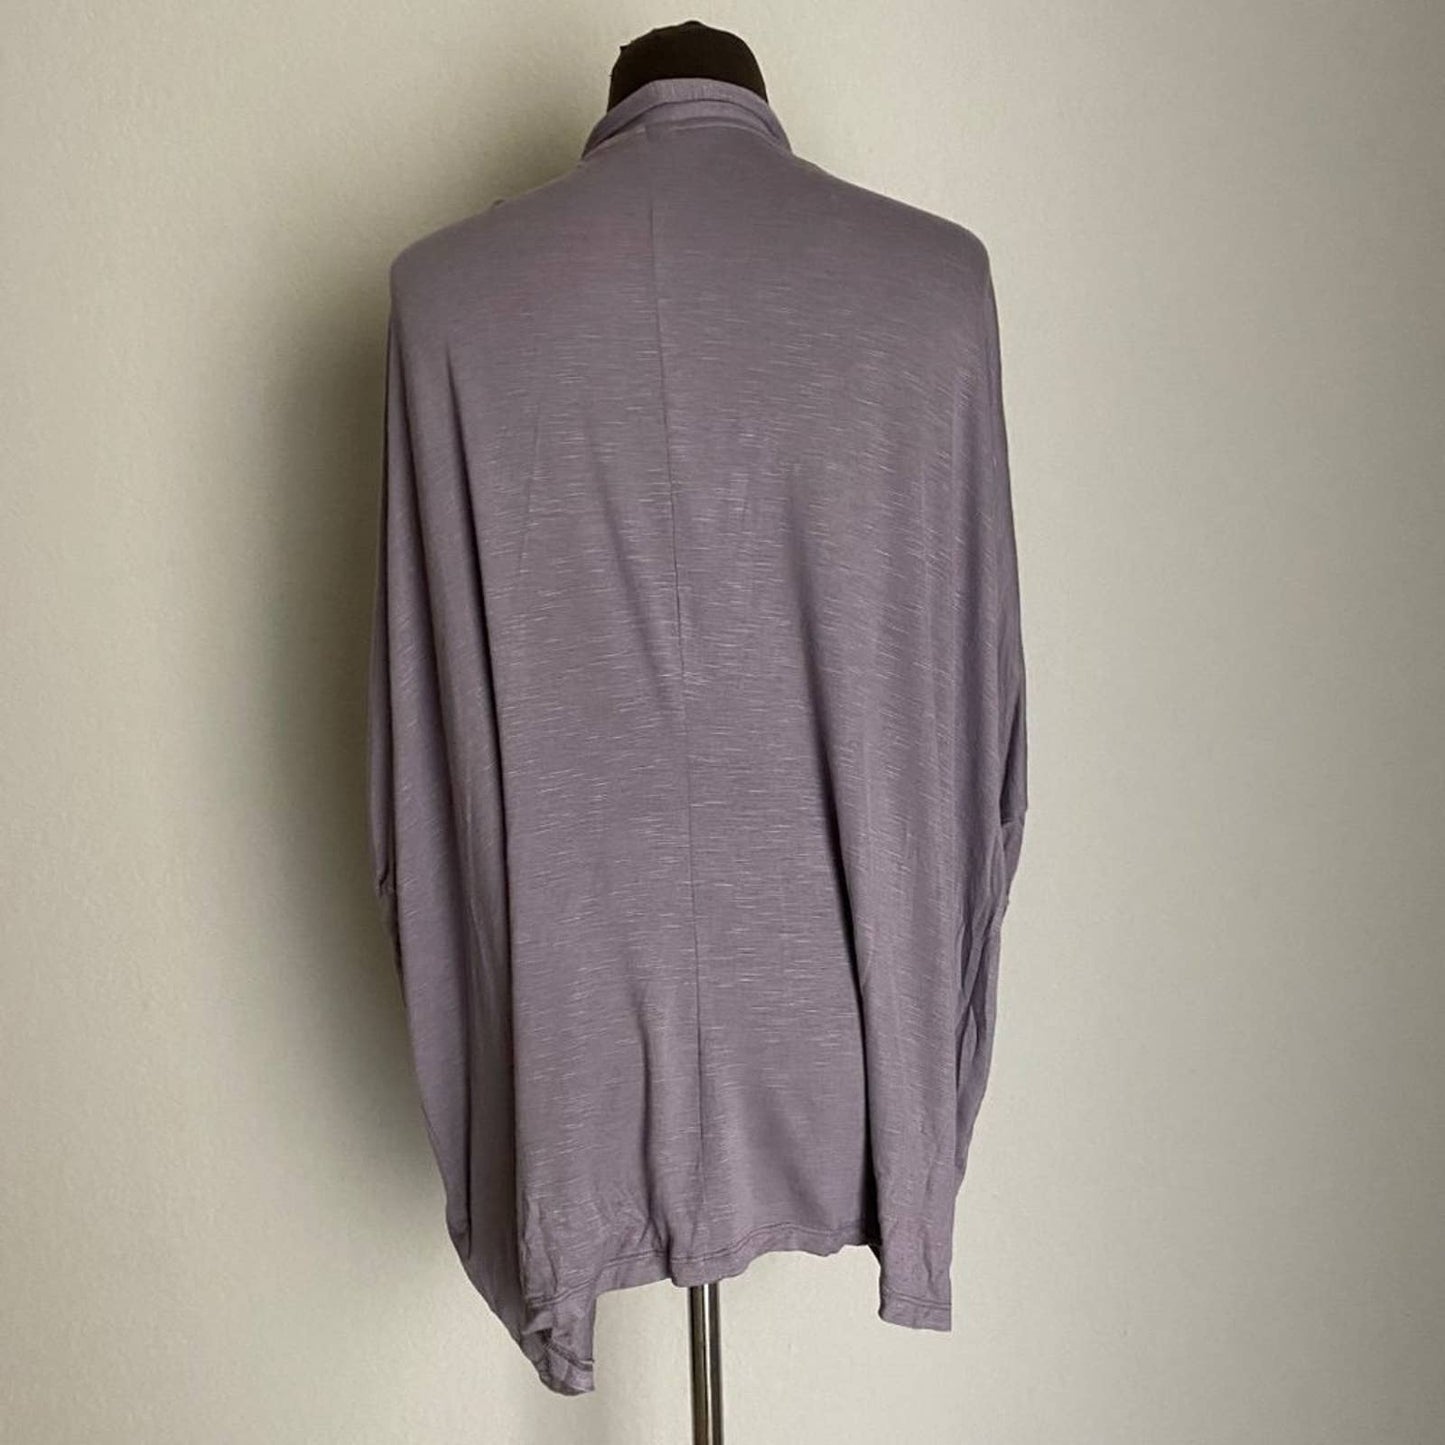 Mossimo sz S long length sleeve open cardigan sweater